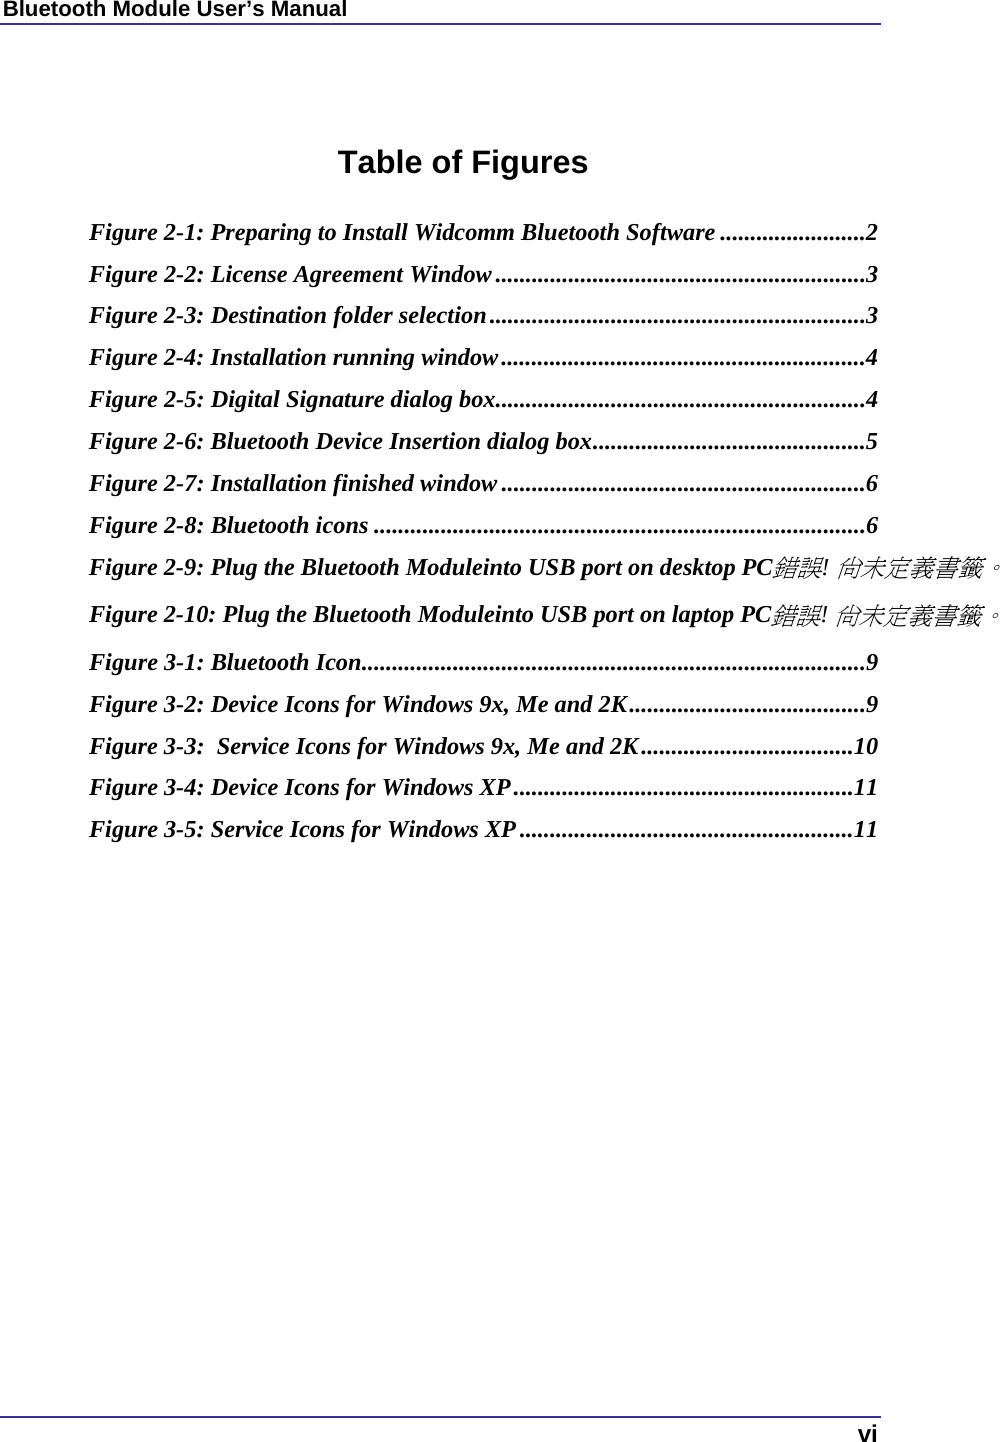 Bluetooth Module User’s Manual  vi   Table of Figures  Figure 2-1: Preparing to Install Widcomm Bluetooth Software ........................2 Figure 2-2: License Agreement Window.............................................................3 Figure 2-3: Destination folder selection..............................................................3 Figure 2-4: Installation running window............................................................4 Figure 2-5: Digital Signature dialog box.............................................................4 Figure 2-6: Bluetooth Device Insertion dialog box.............................................5 Figure 2-7: Installation finished window............................................................6 Figure 2-8: Bluetooth icons .................................................................................6 Figure 2-9: Plug the Bluetooth Moduleinto USB port on desktop PC錯誤! 尚未定義書籤。Figure 2-10: Plug the Bluetooth Moduleinto USB port on laptop PC錯誤! 尚未定義書籤。Figure 3-1: Bluetooth Icon...................................................................................9 Figure 3-2: Device Icons for Windows 9x, Me and 2K.......................................9 Figure 3-3:  Service Icons for Windows 9x, Me and 2K...................................10 Figure 3-4: Device Icons for Windows XP........................................................11 Figure 3-5: Service Icons for Windows XP.......................................................11   